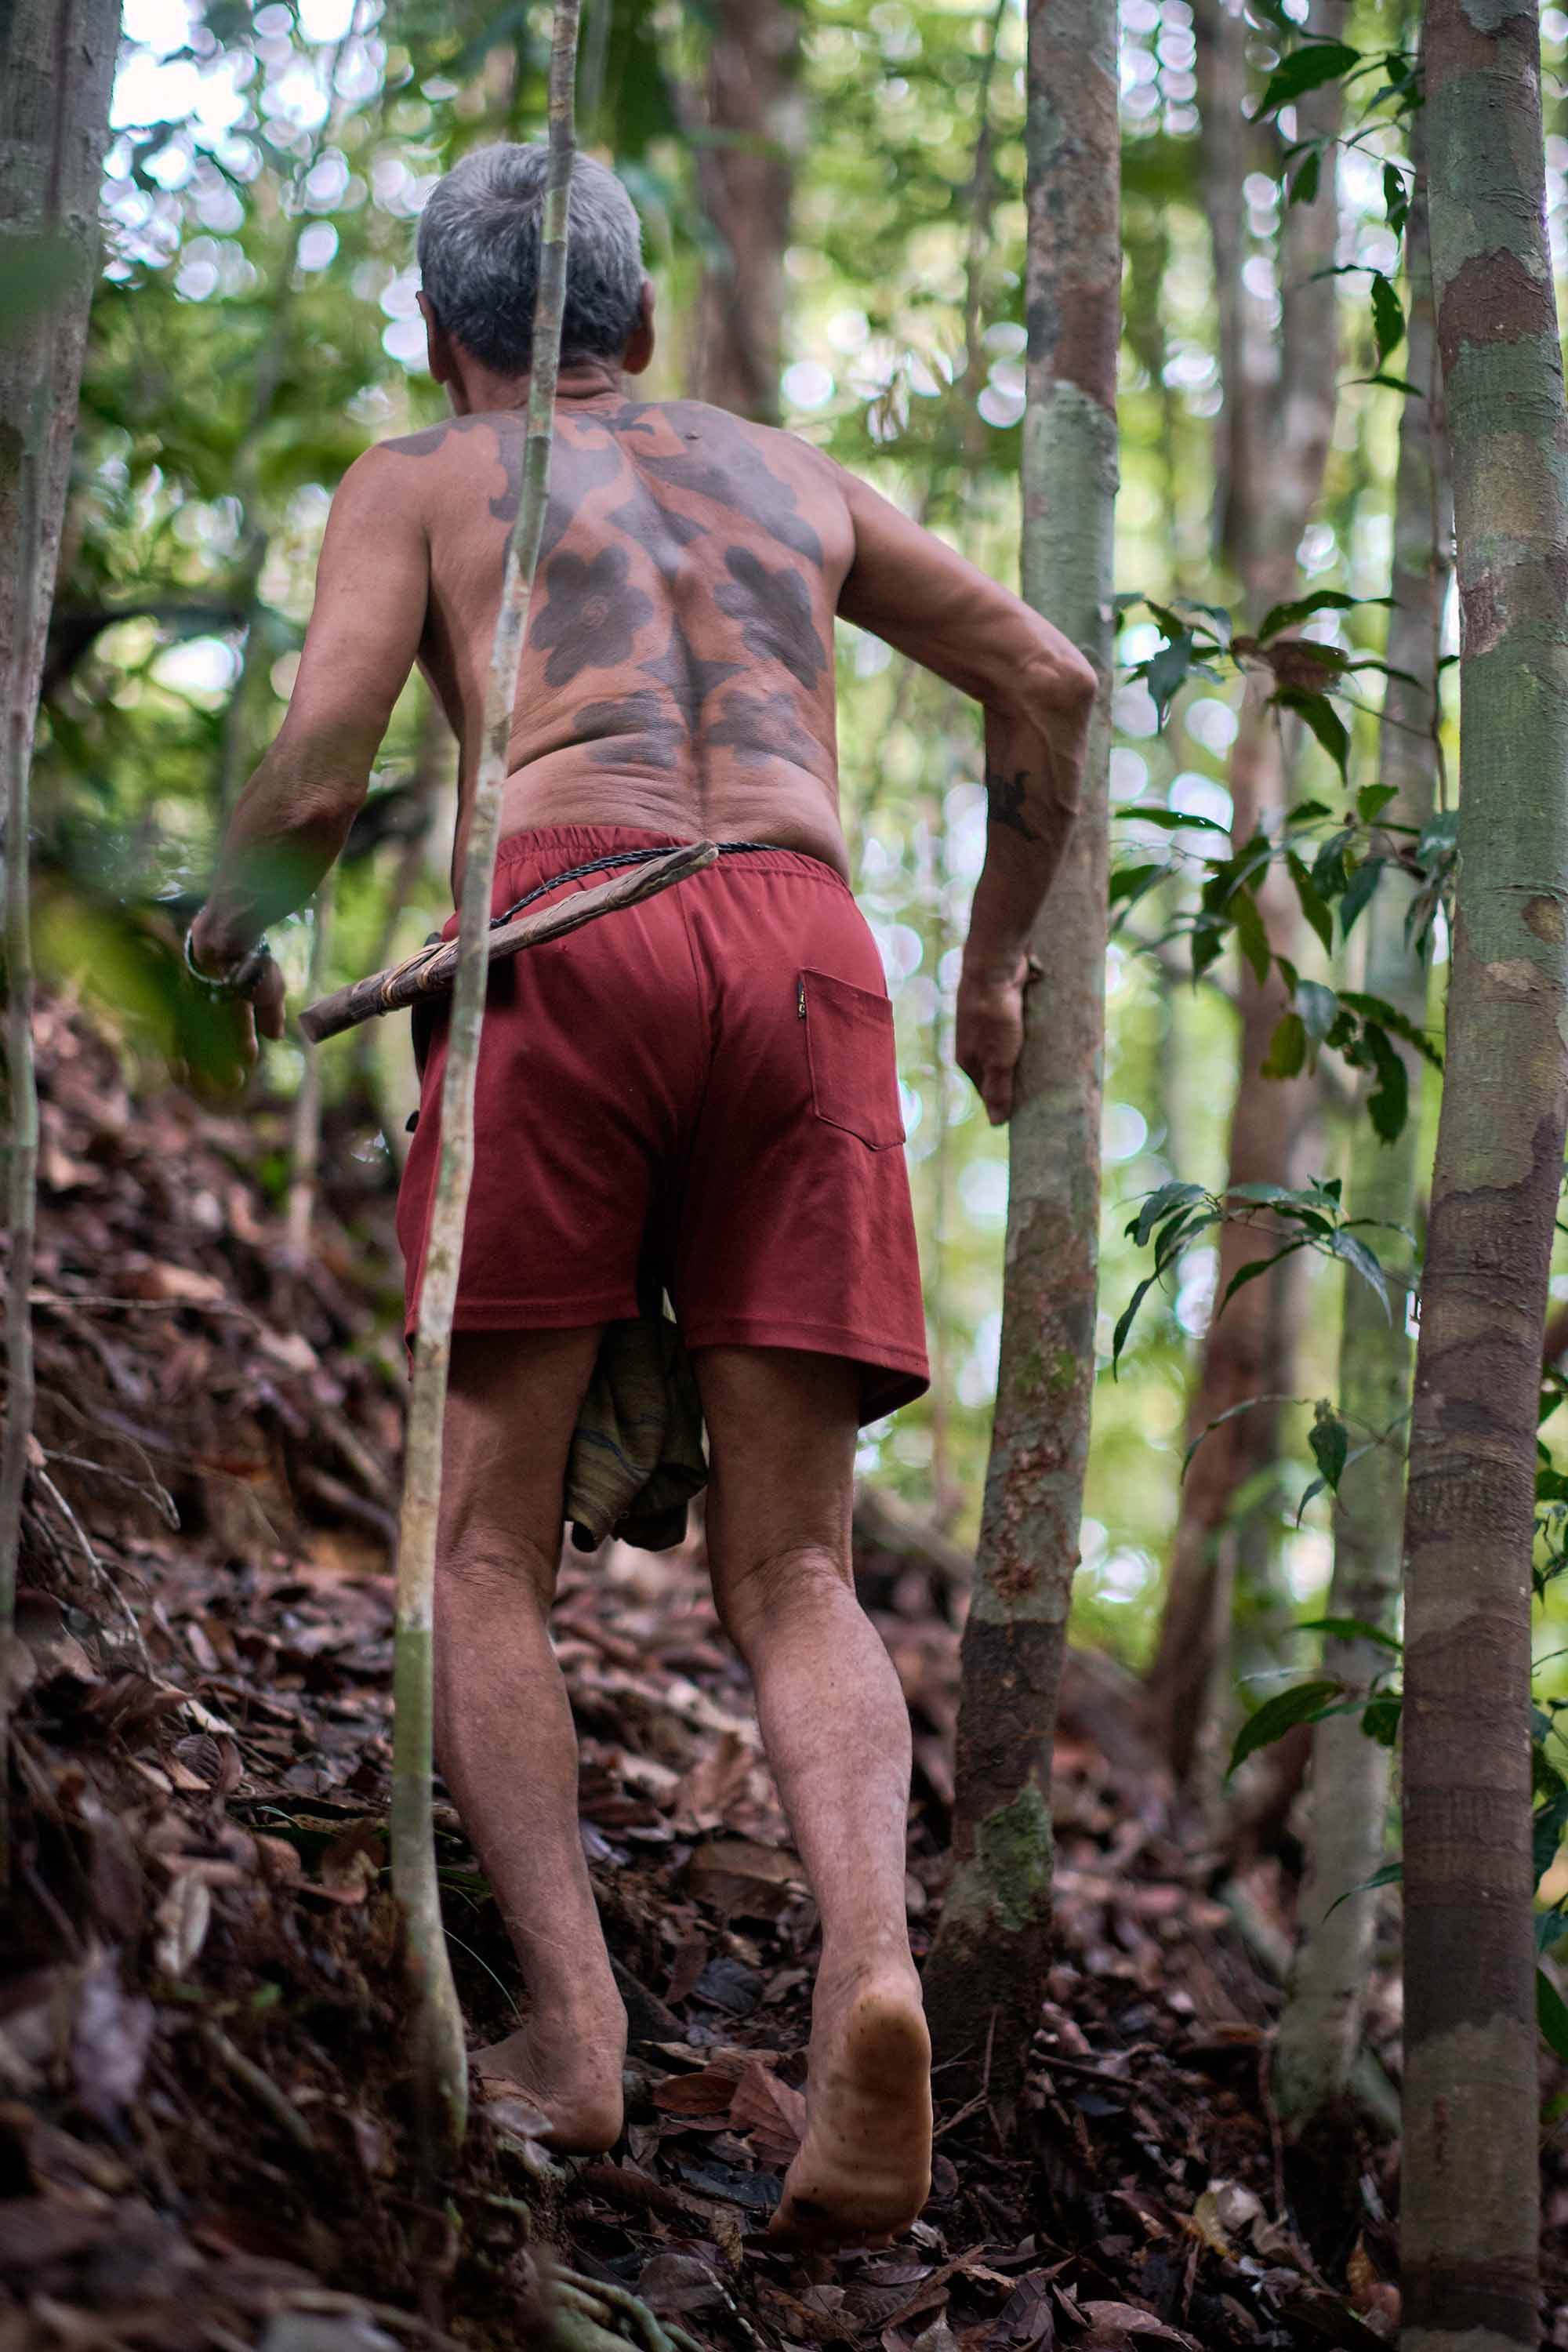 Shirtless Sungai Utik elder Apai Janggut in red shorts walks uphill barefoot in his community’s forestland